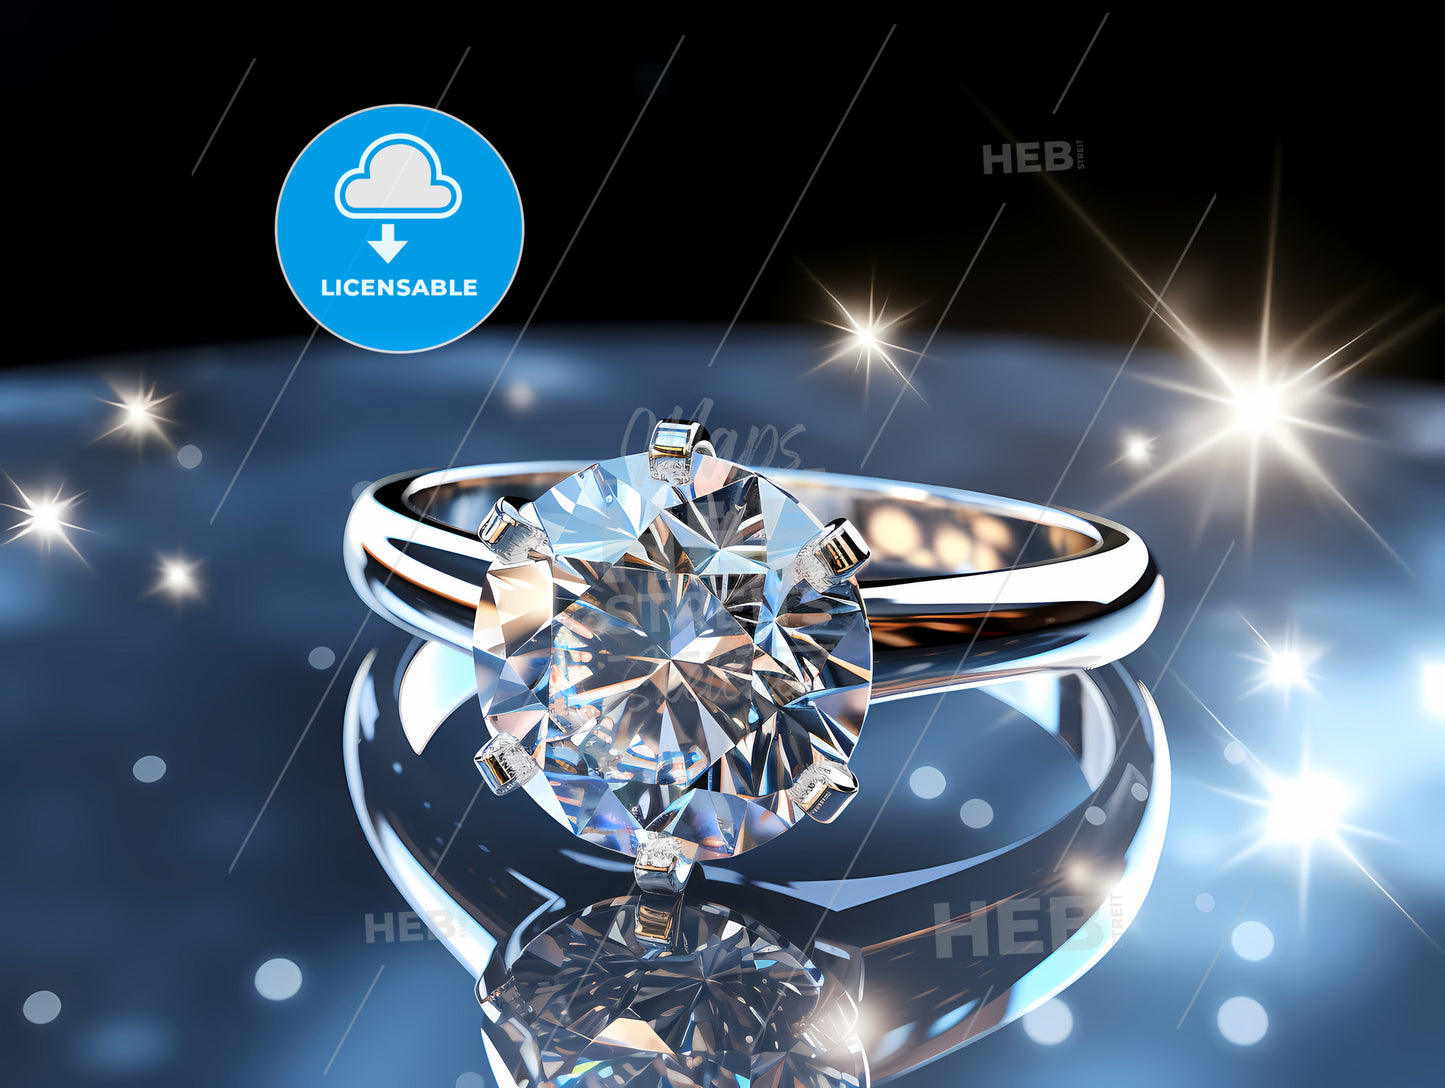 A Sparkling Diamond Ring Skylight Exposure, A Diamond Ring On A Shiny Surface